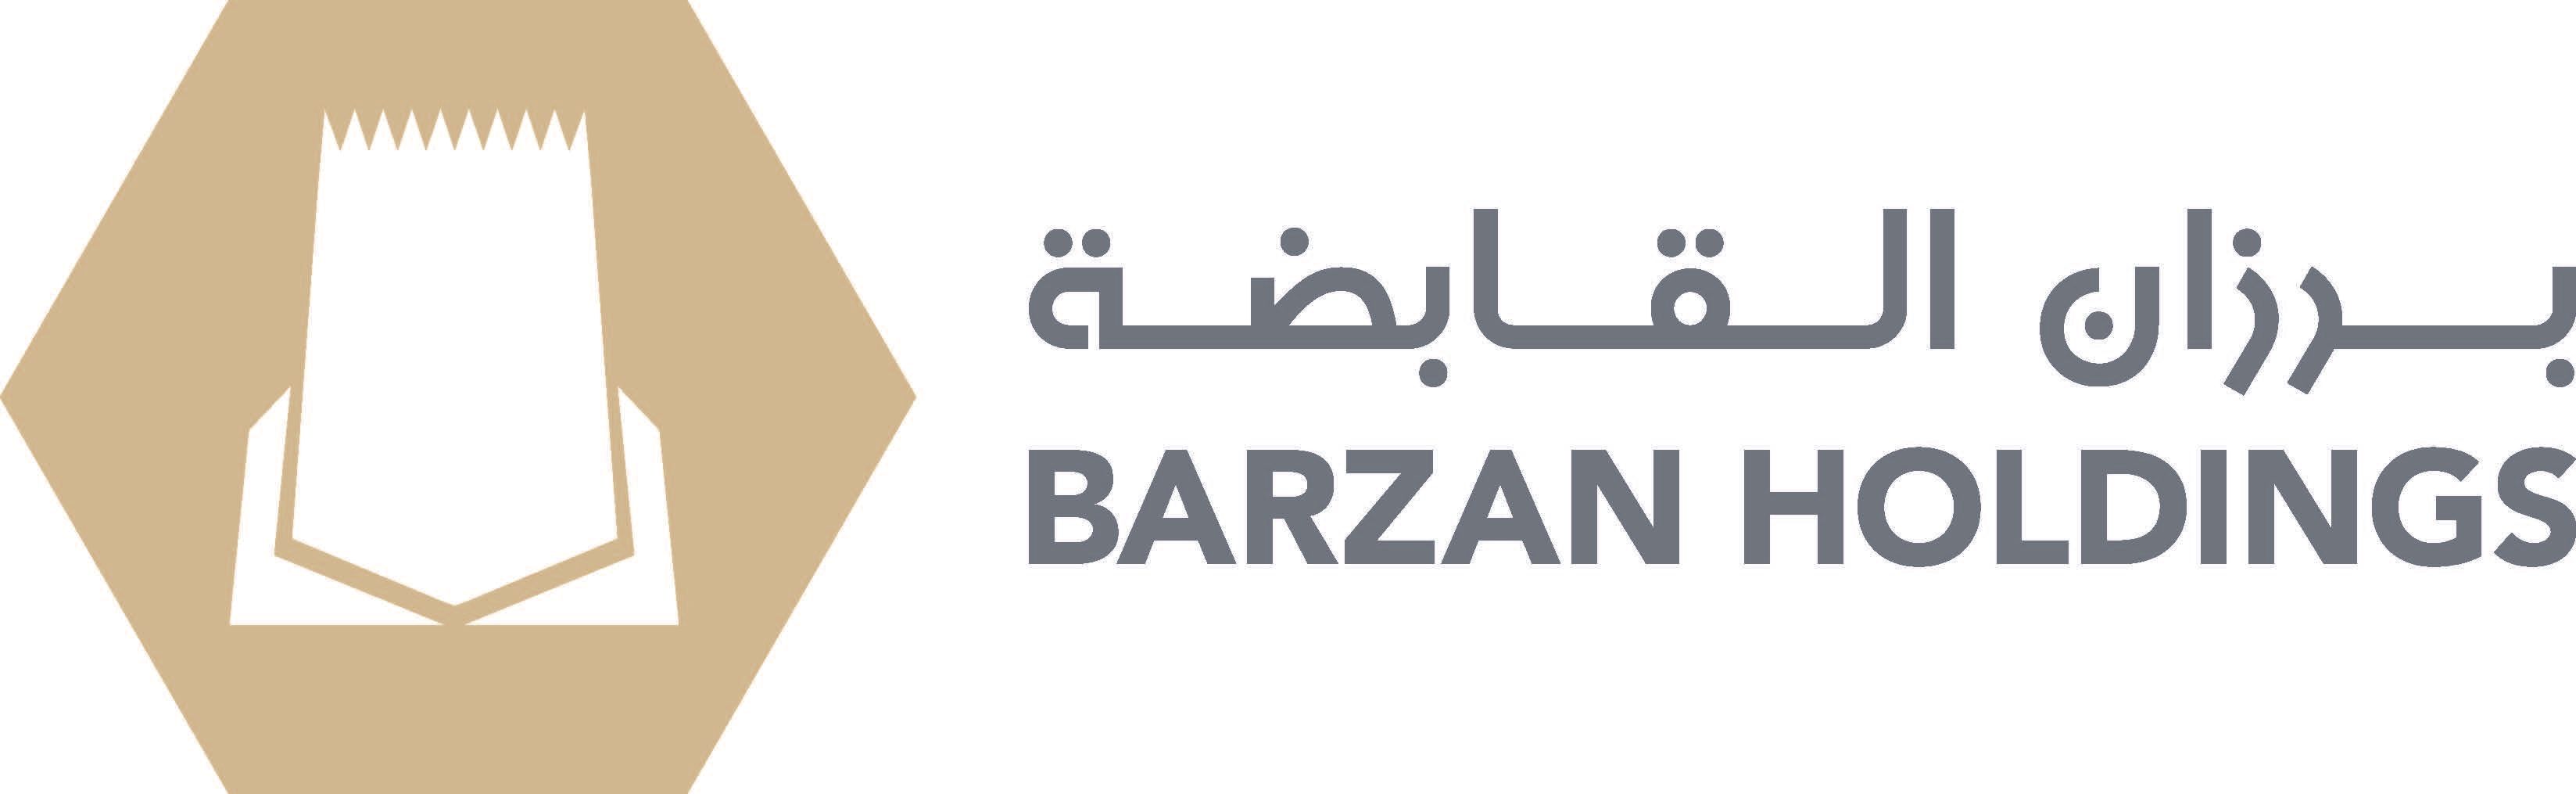 Barzan Holdings